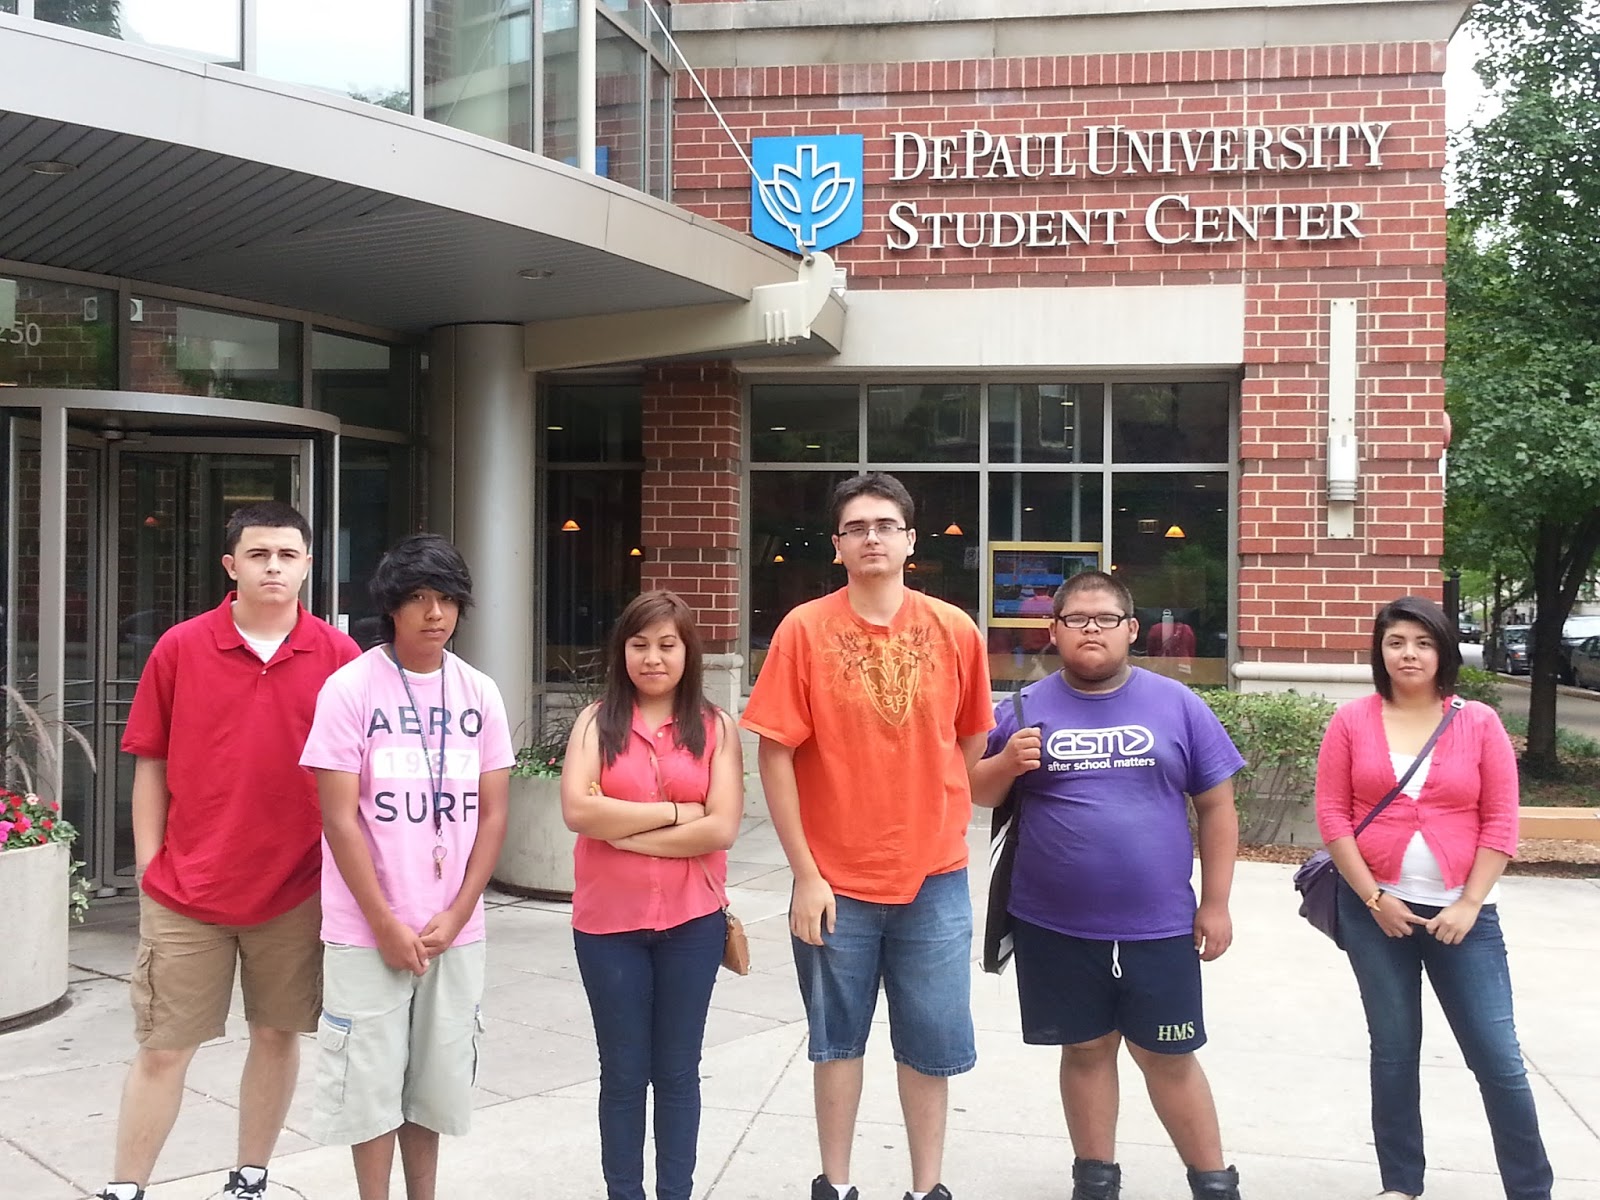 Latino Organization of the Southwest: Students Visit DePaul University